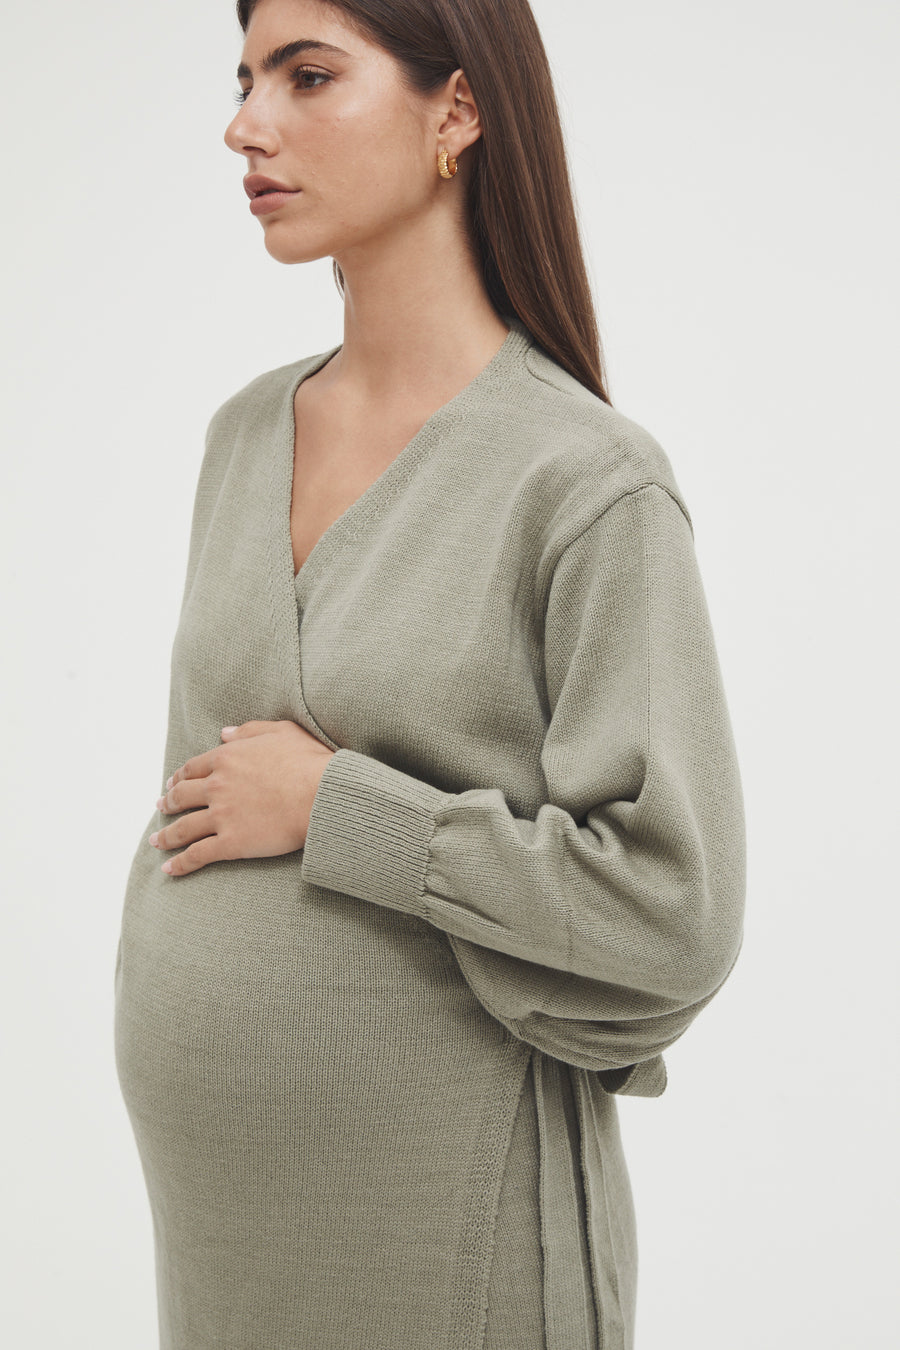 Maternity Wrap Dress (Olive) 2